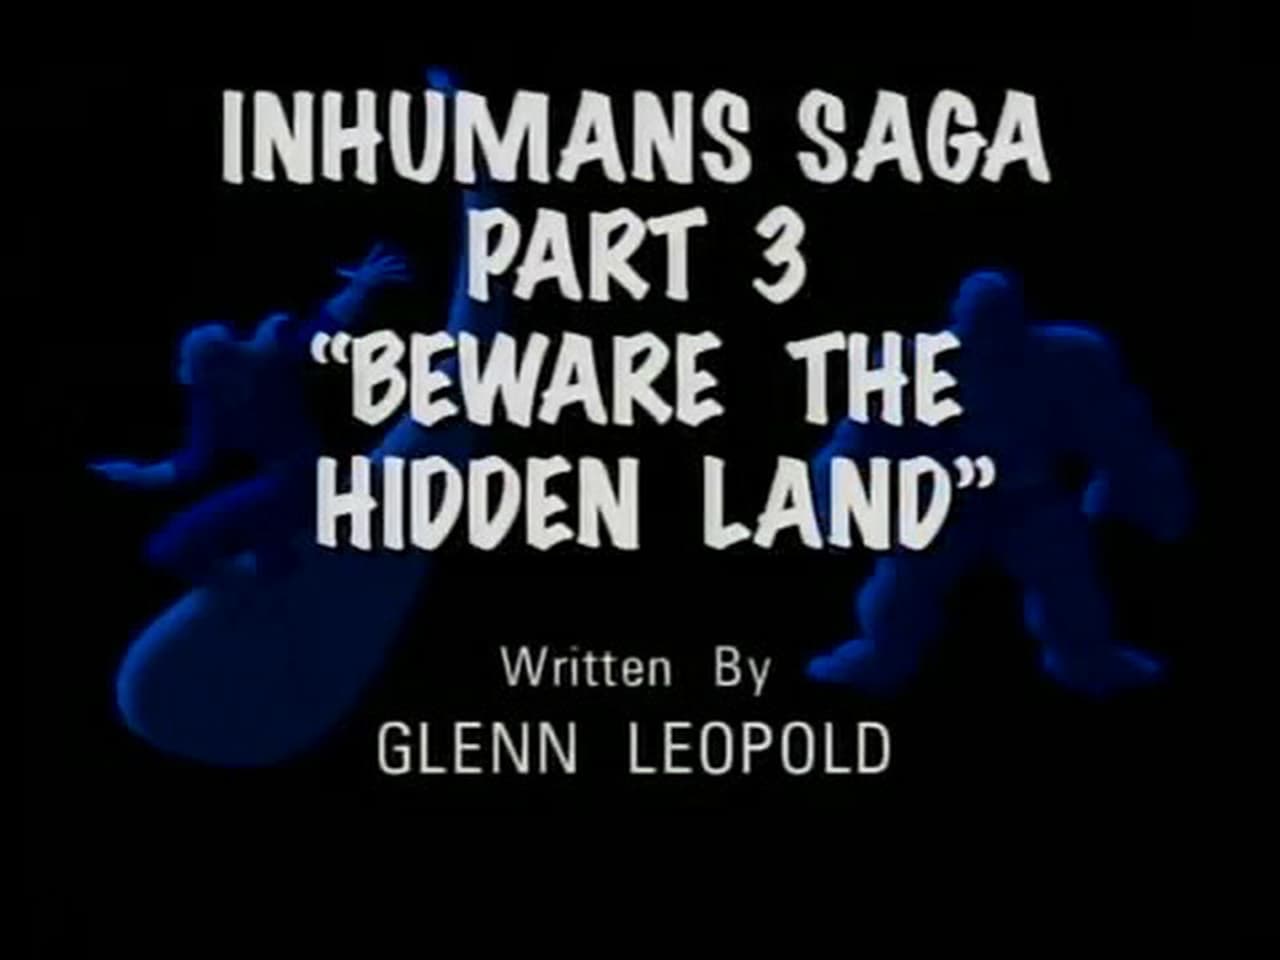 Inhumans Saga 3 Beware the Hidden Land